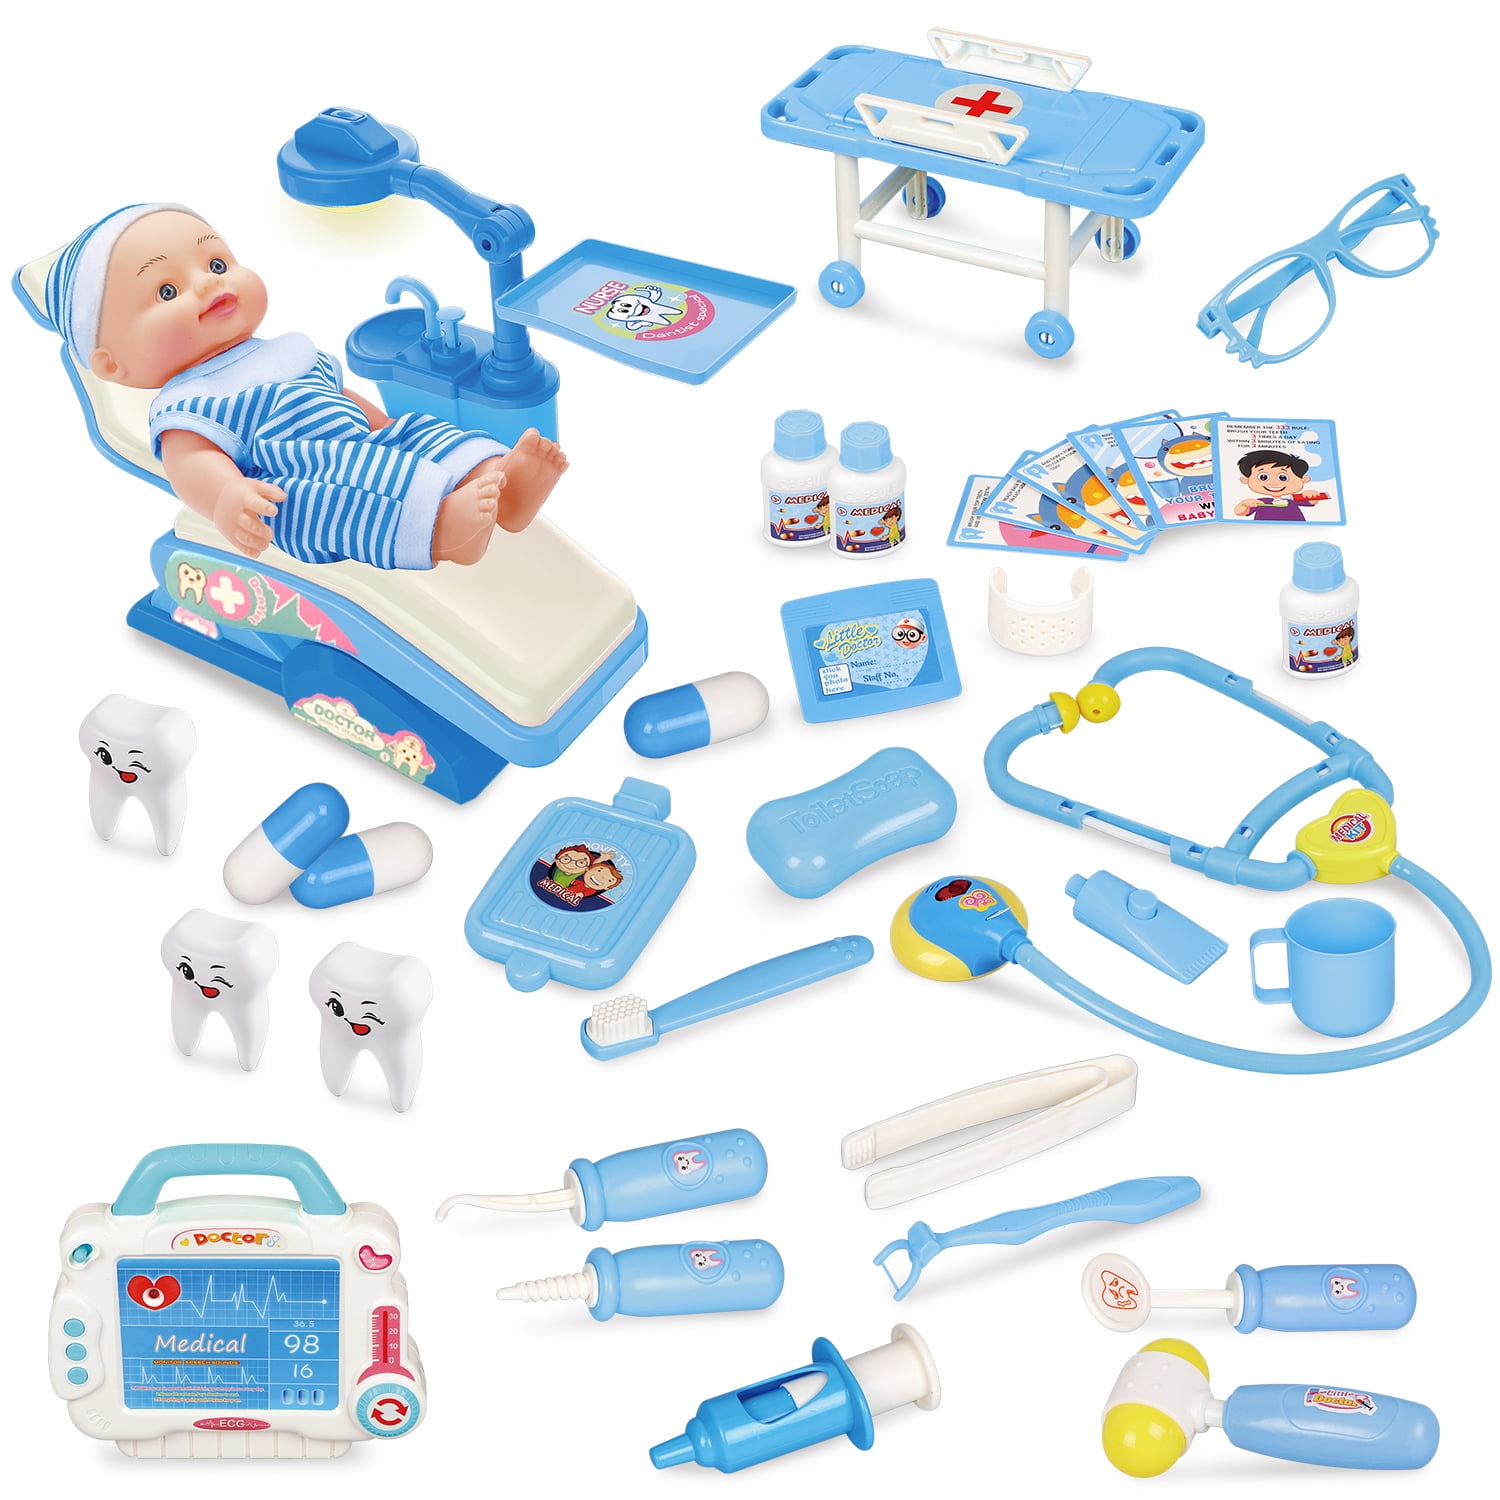 Stethoscope, Reflex Hammer, Syringe etc. Toy Doctor or Nurse Medical Play Set 